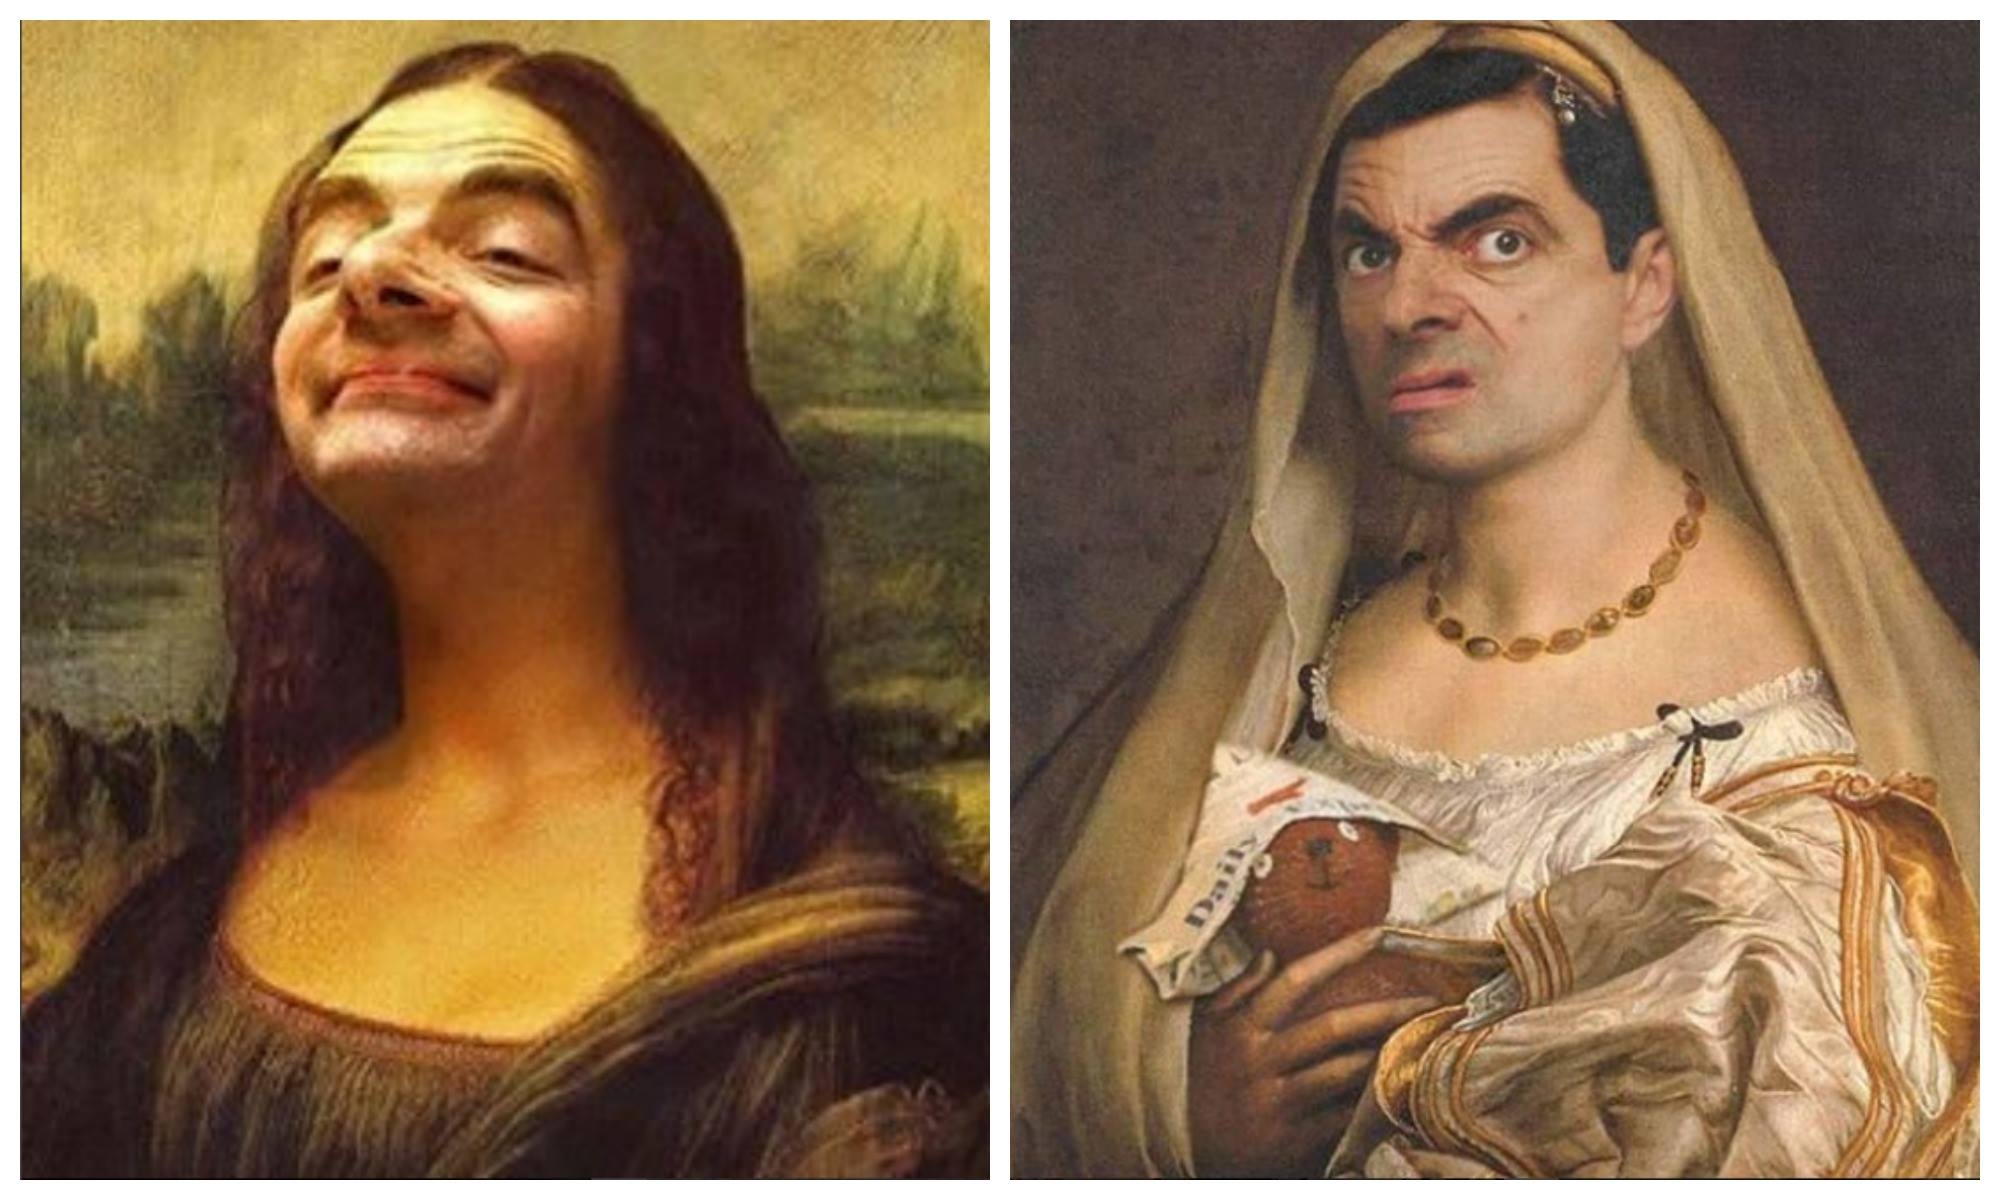 Mr. Bean Photoshop Batlle